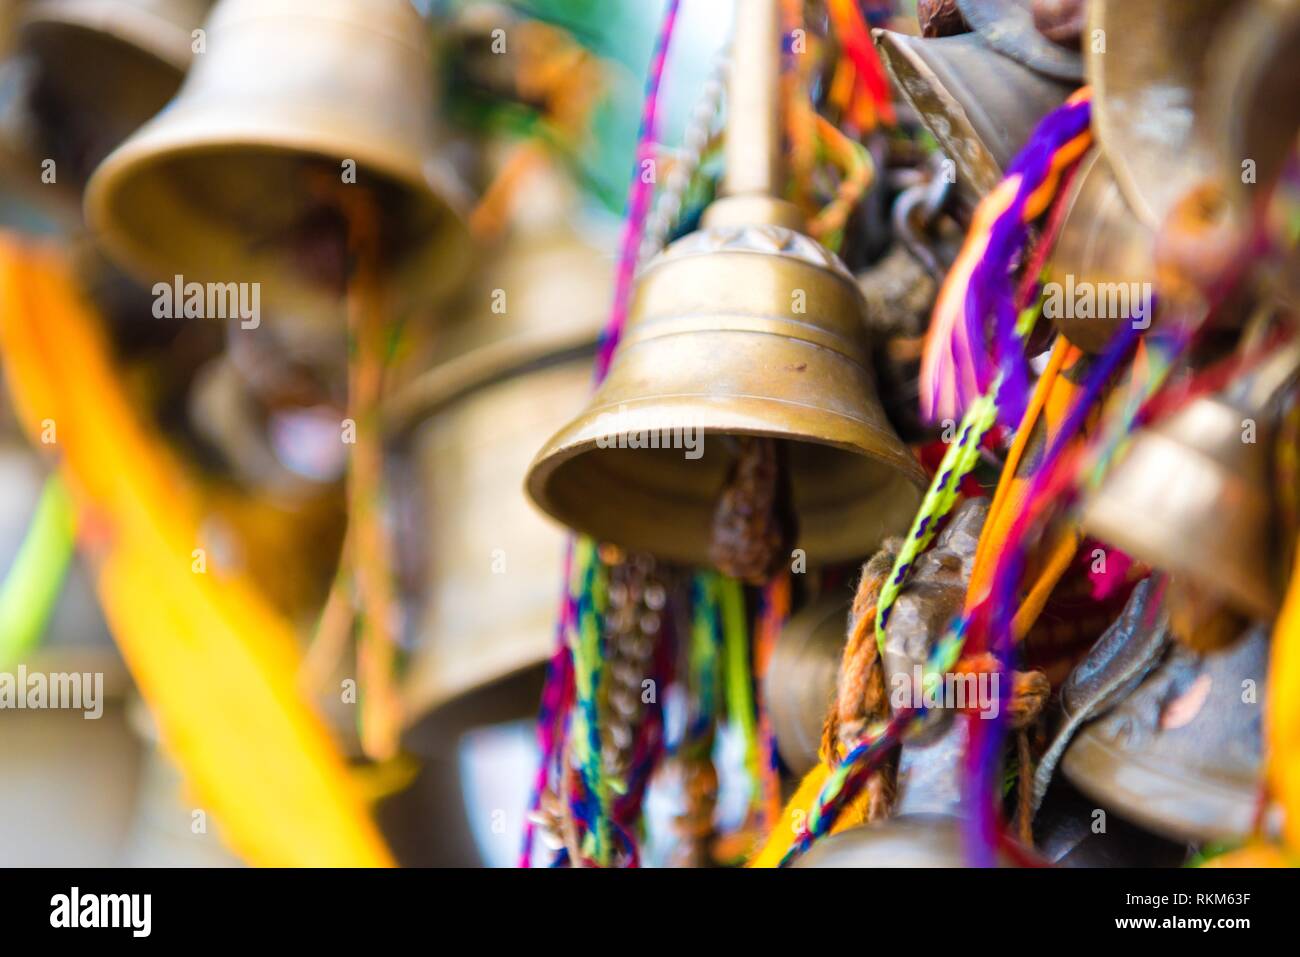 Tibetan prayer bell hi-res stock photography and images - Alamy